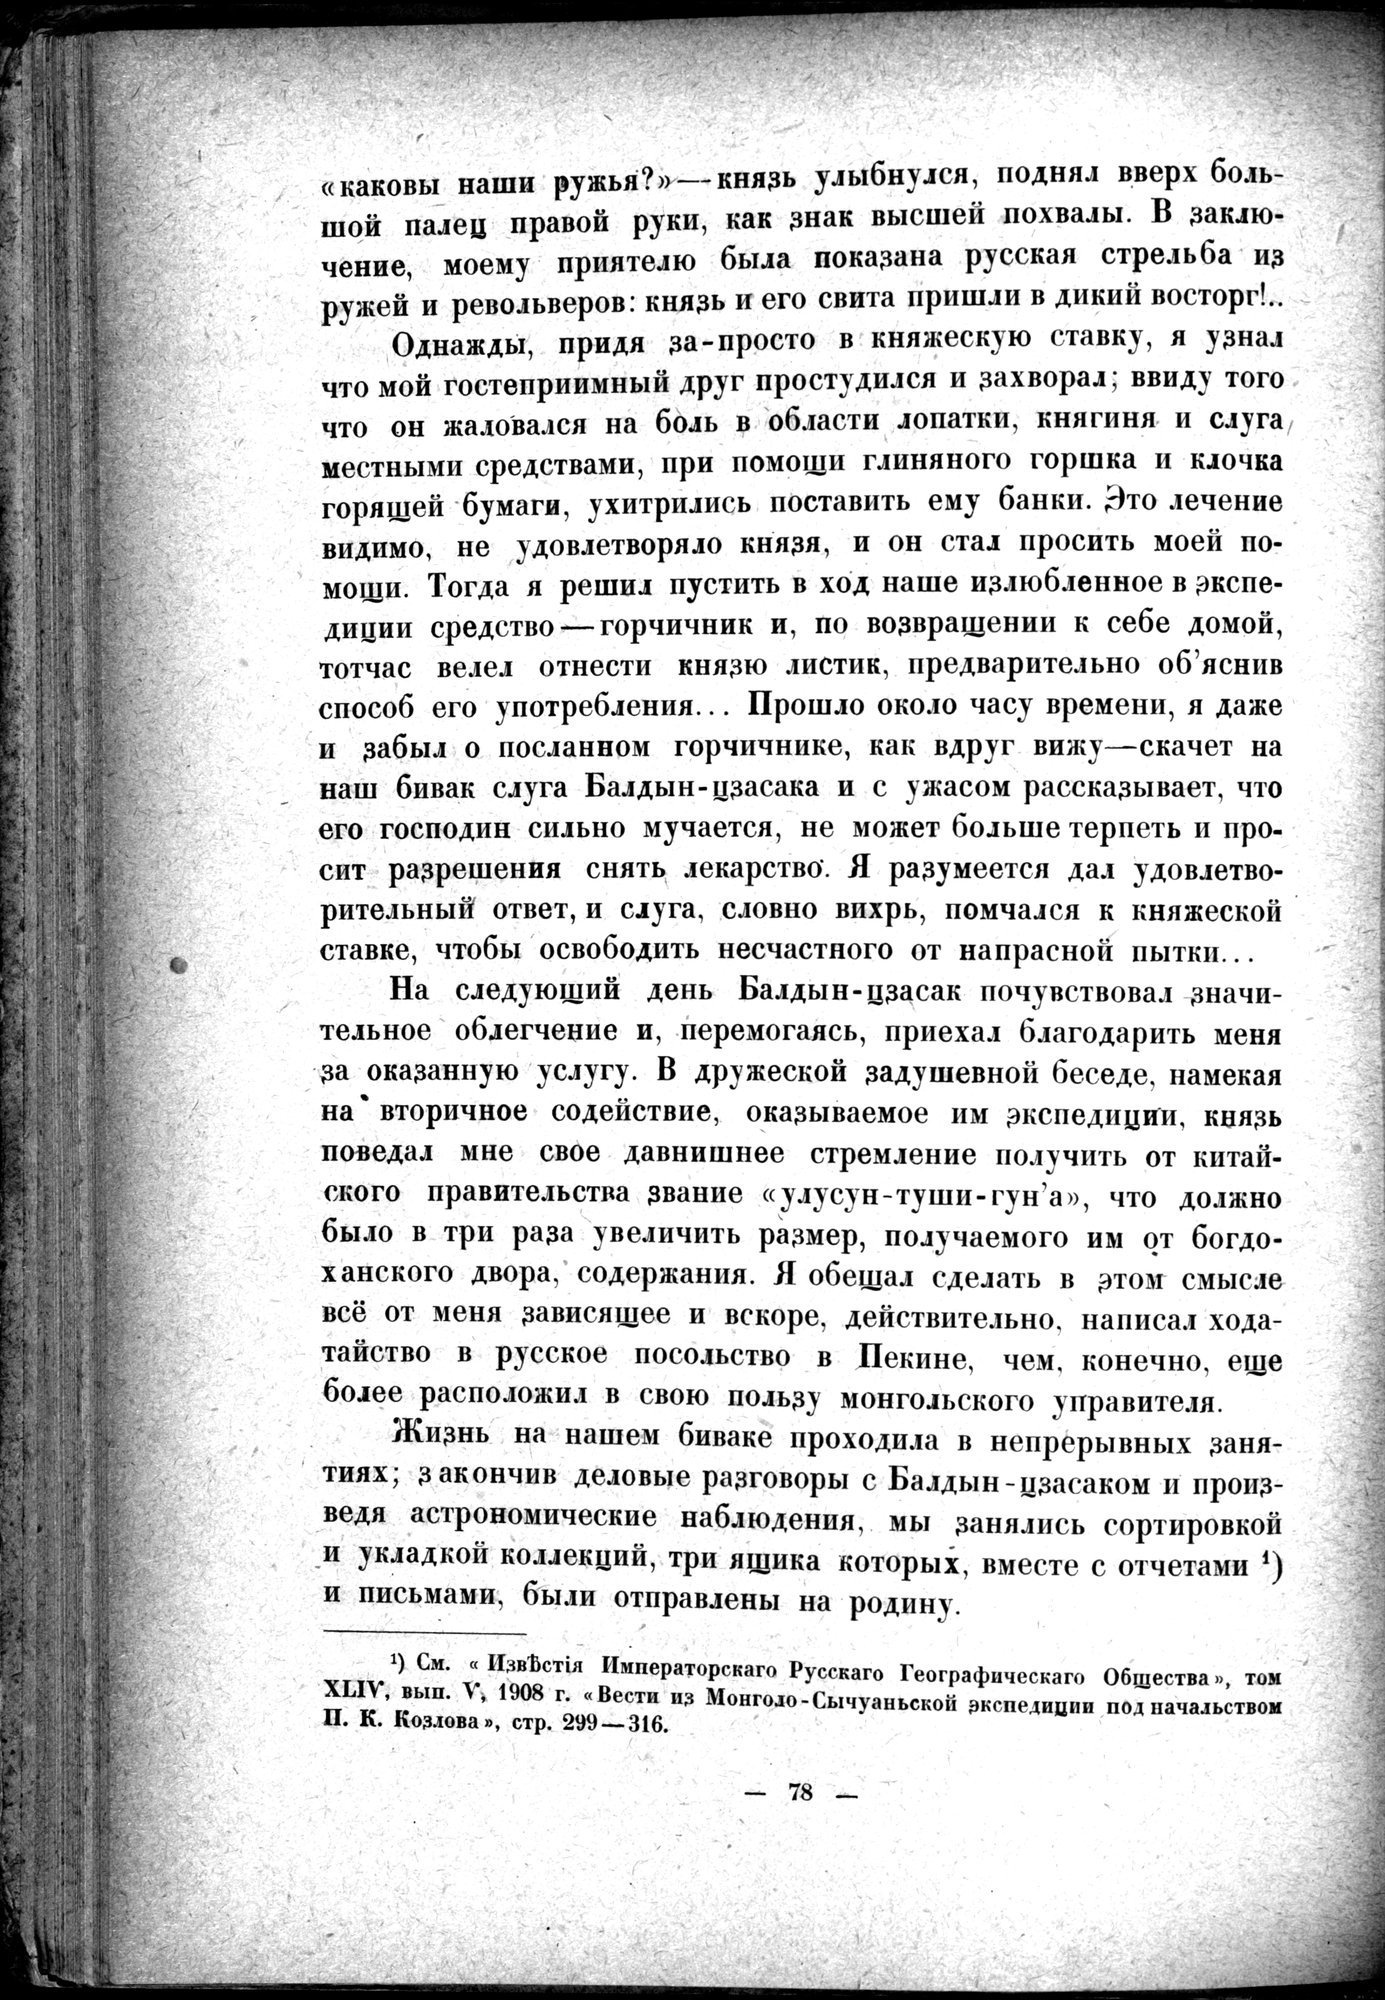 Mongoliya i Amdo i mertby gorod Khara-Khoto : vol.1 / Page 102 (Grayscale High Resolution Image)